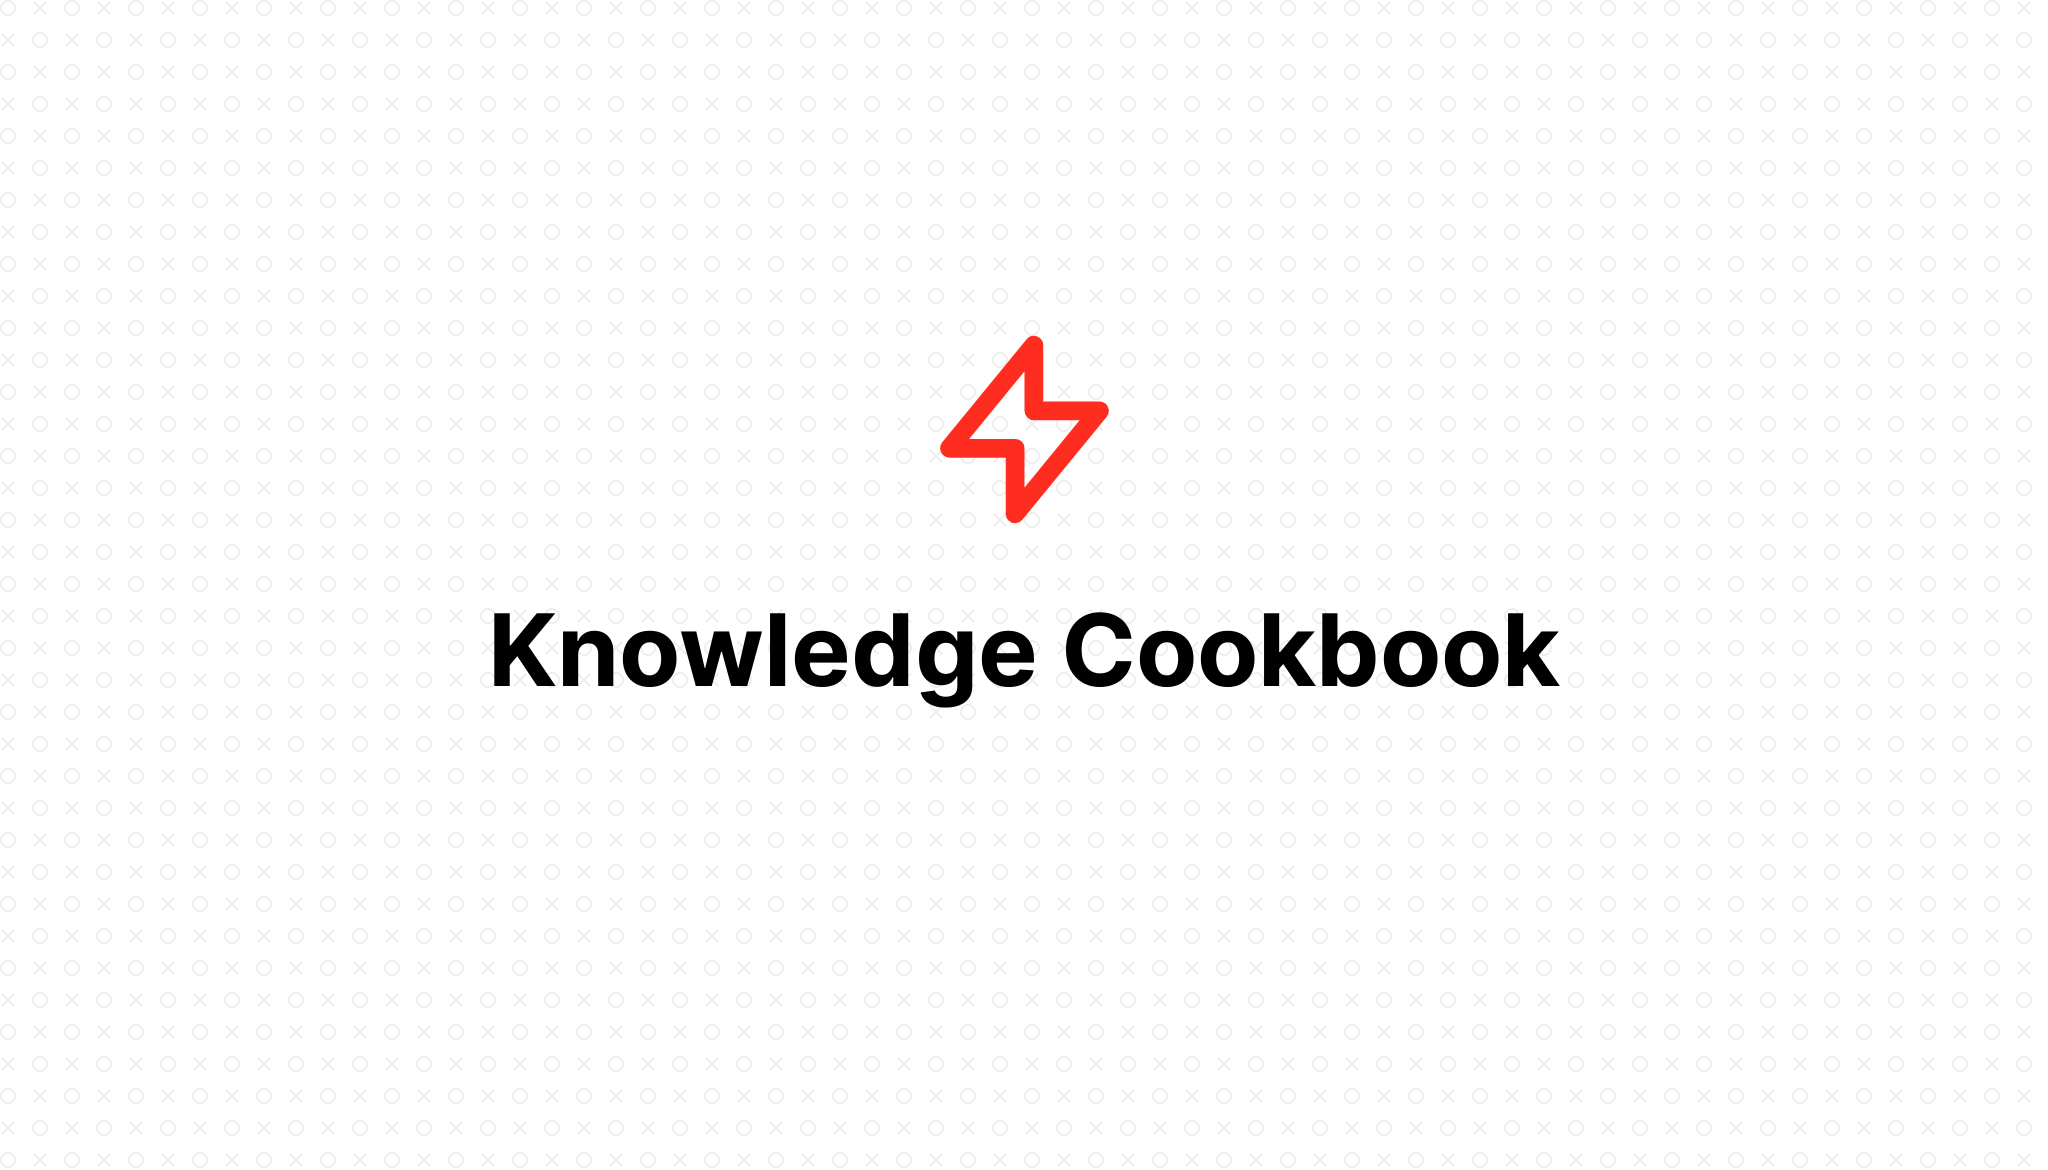 Knowledge Cookbook